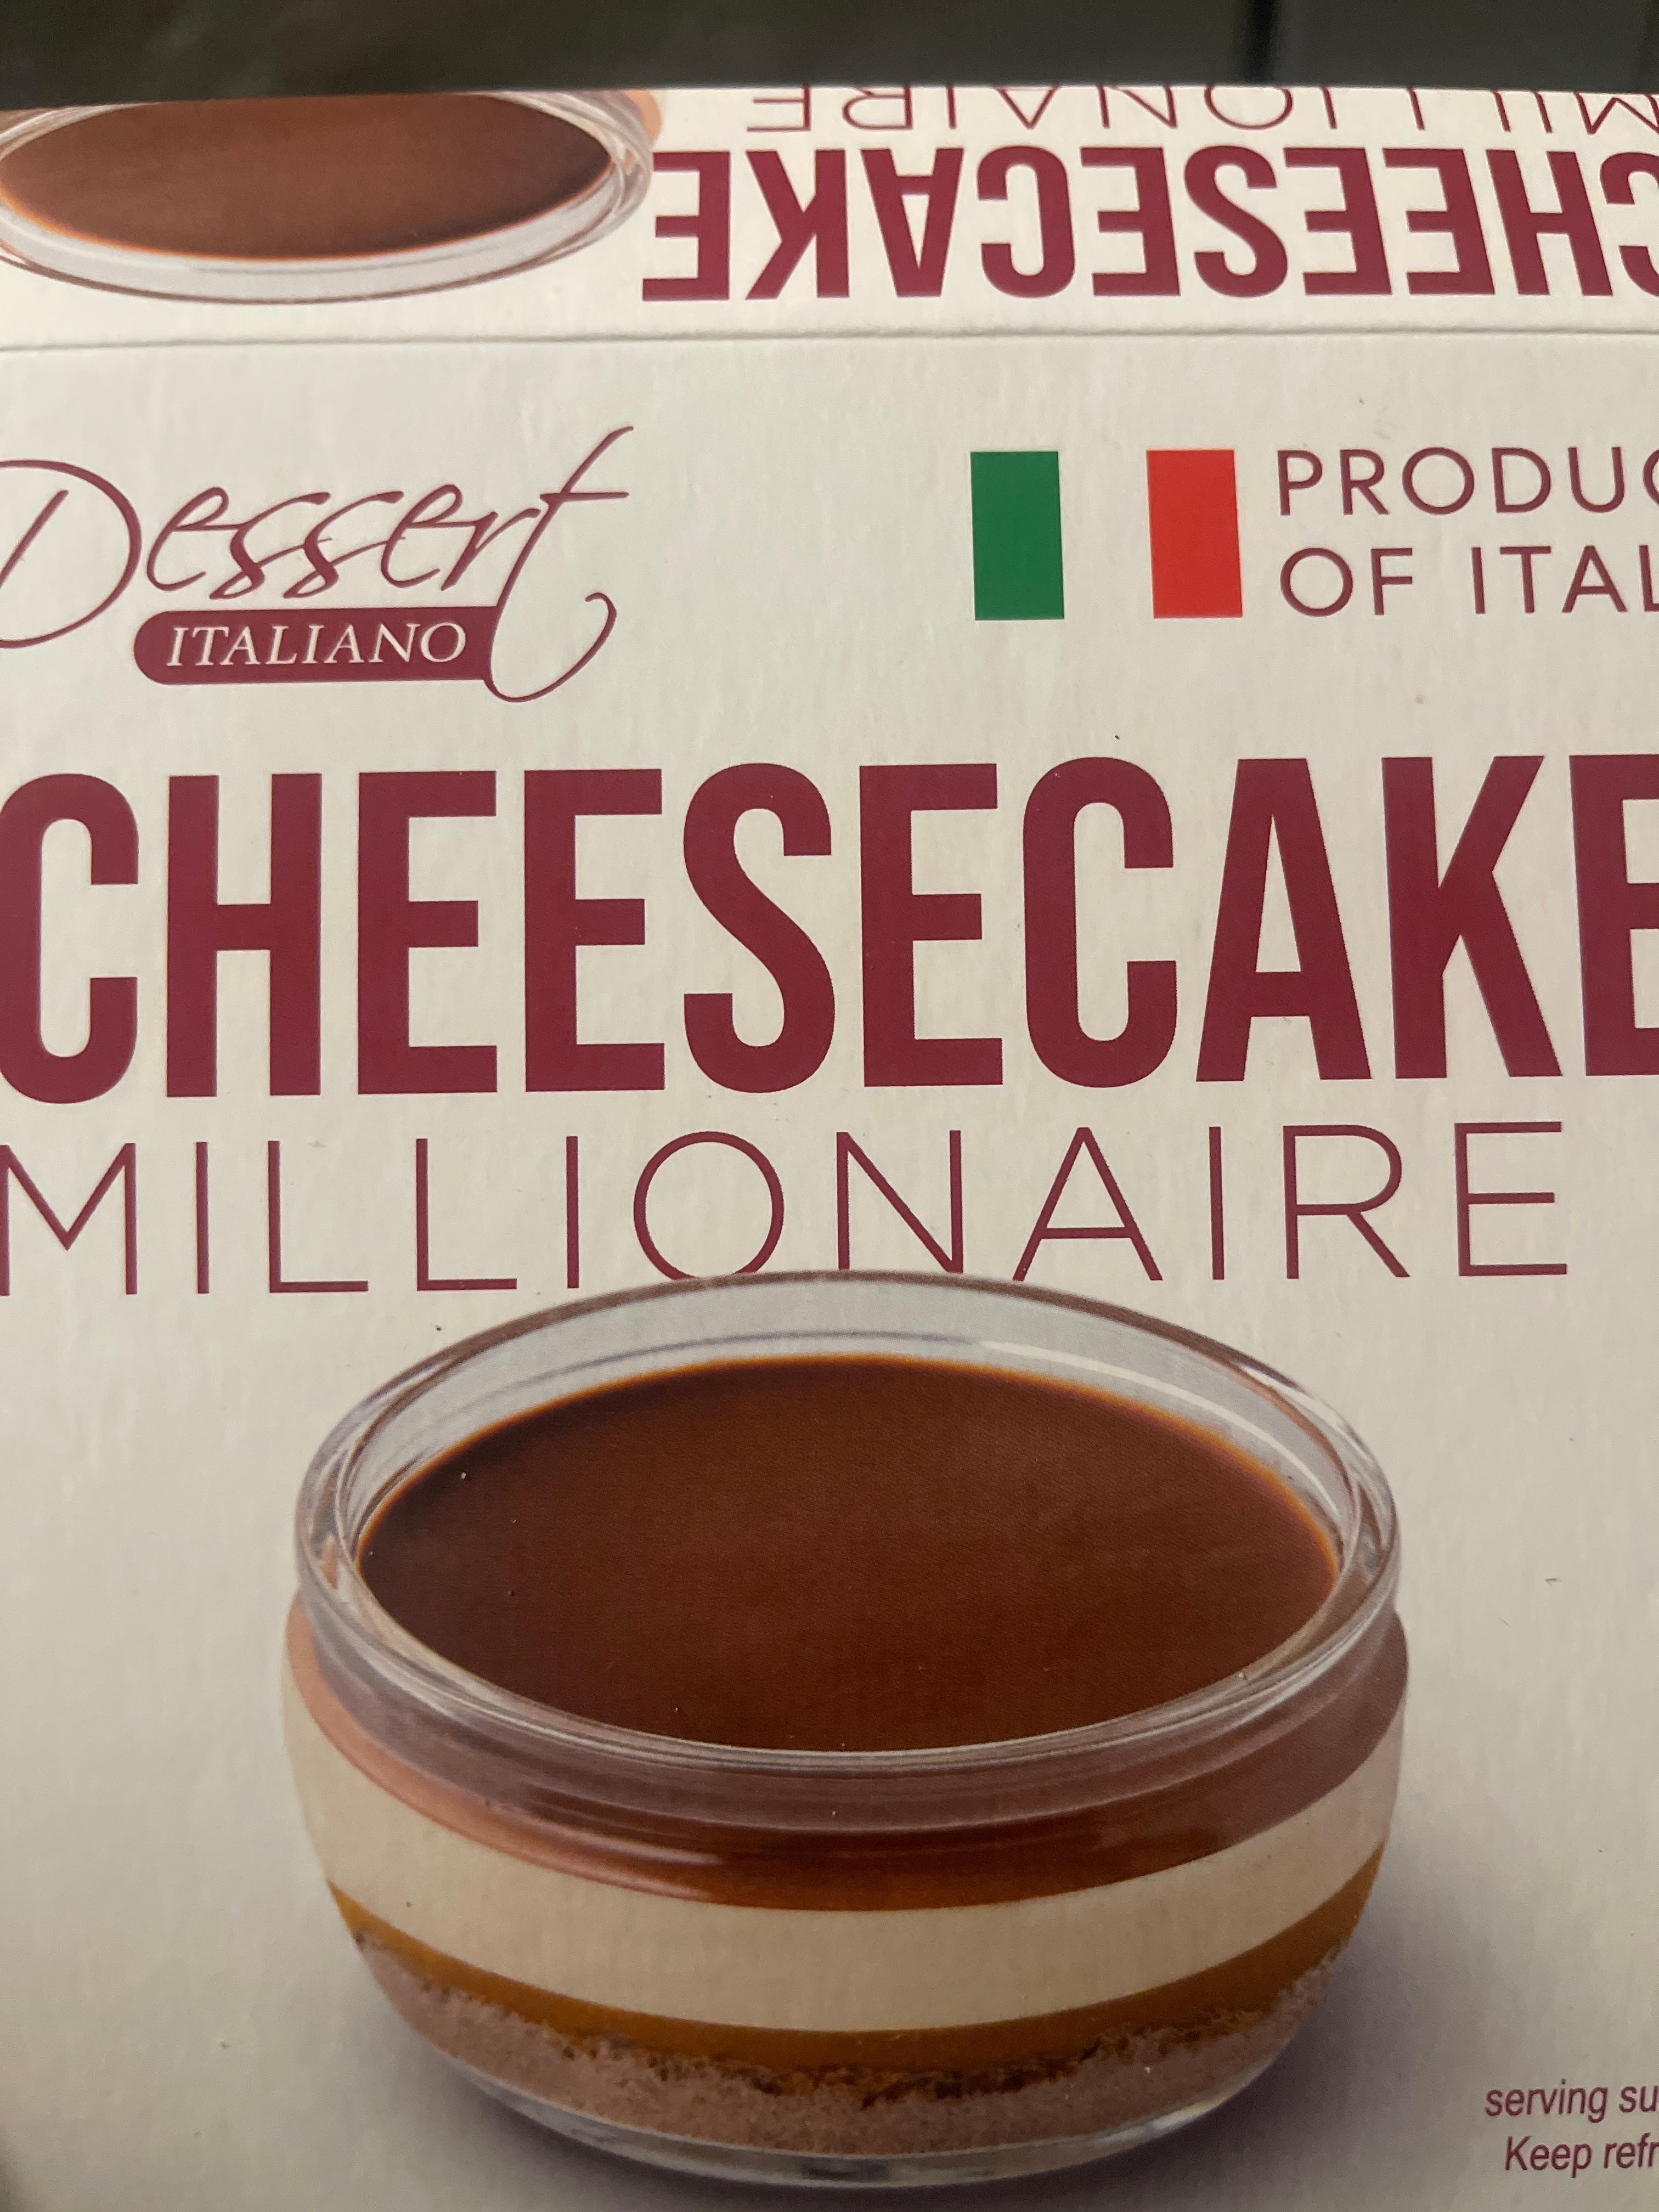 Cheesecake Millionaire